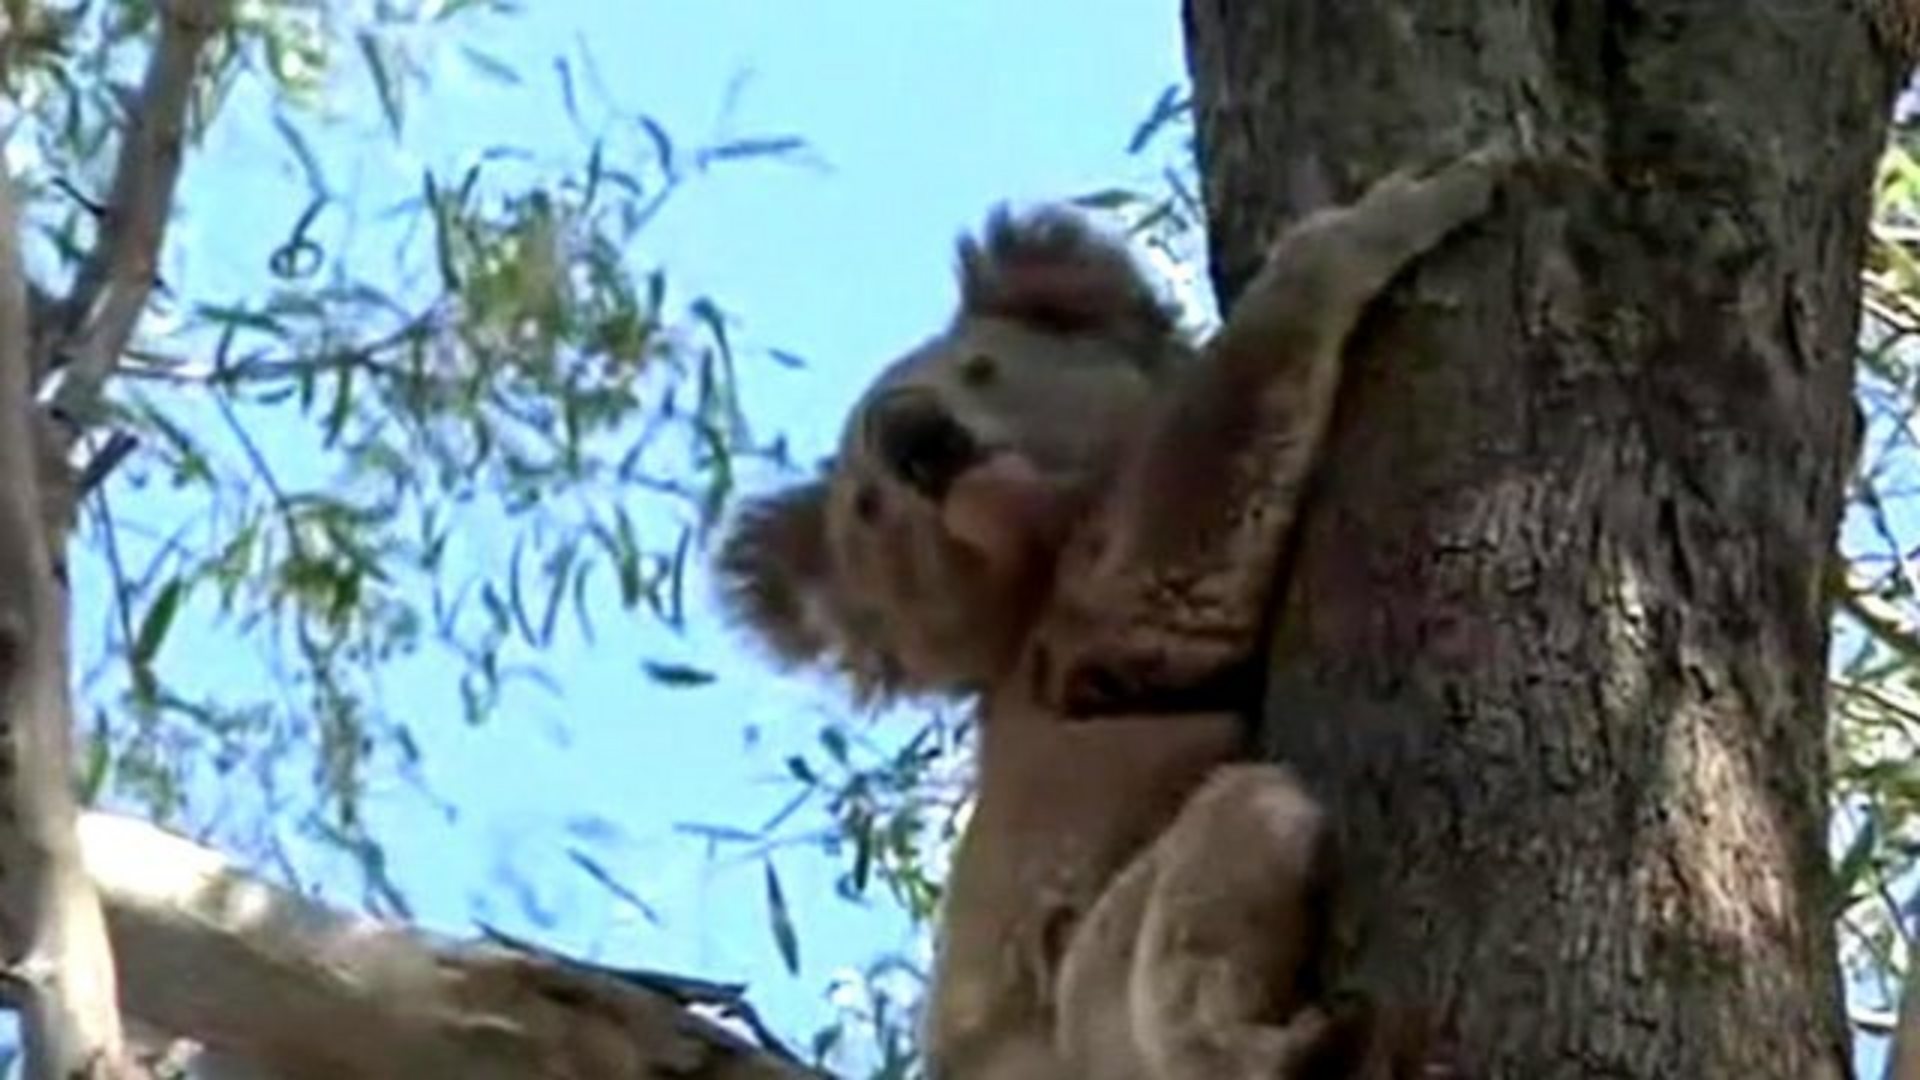 Parched koalas seek new water sources - BBC News